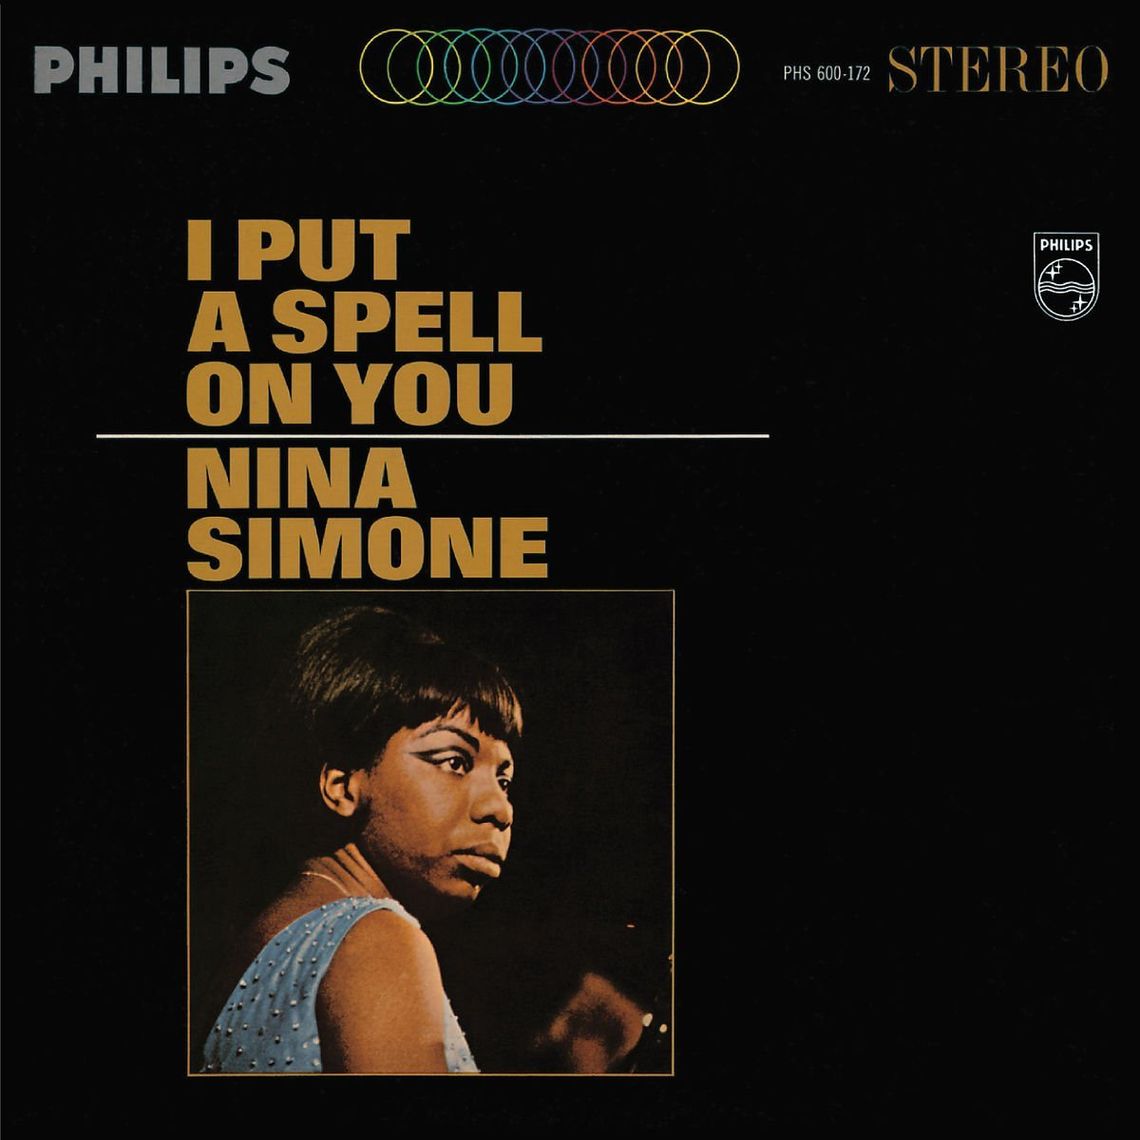 Nina Simone "I put a spell on you"